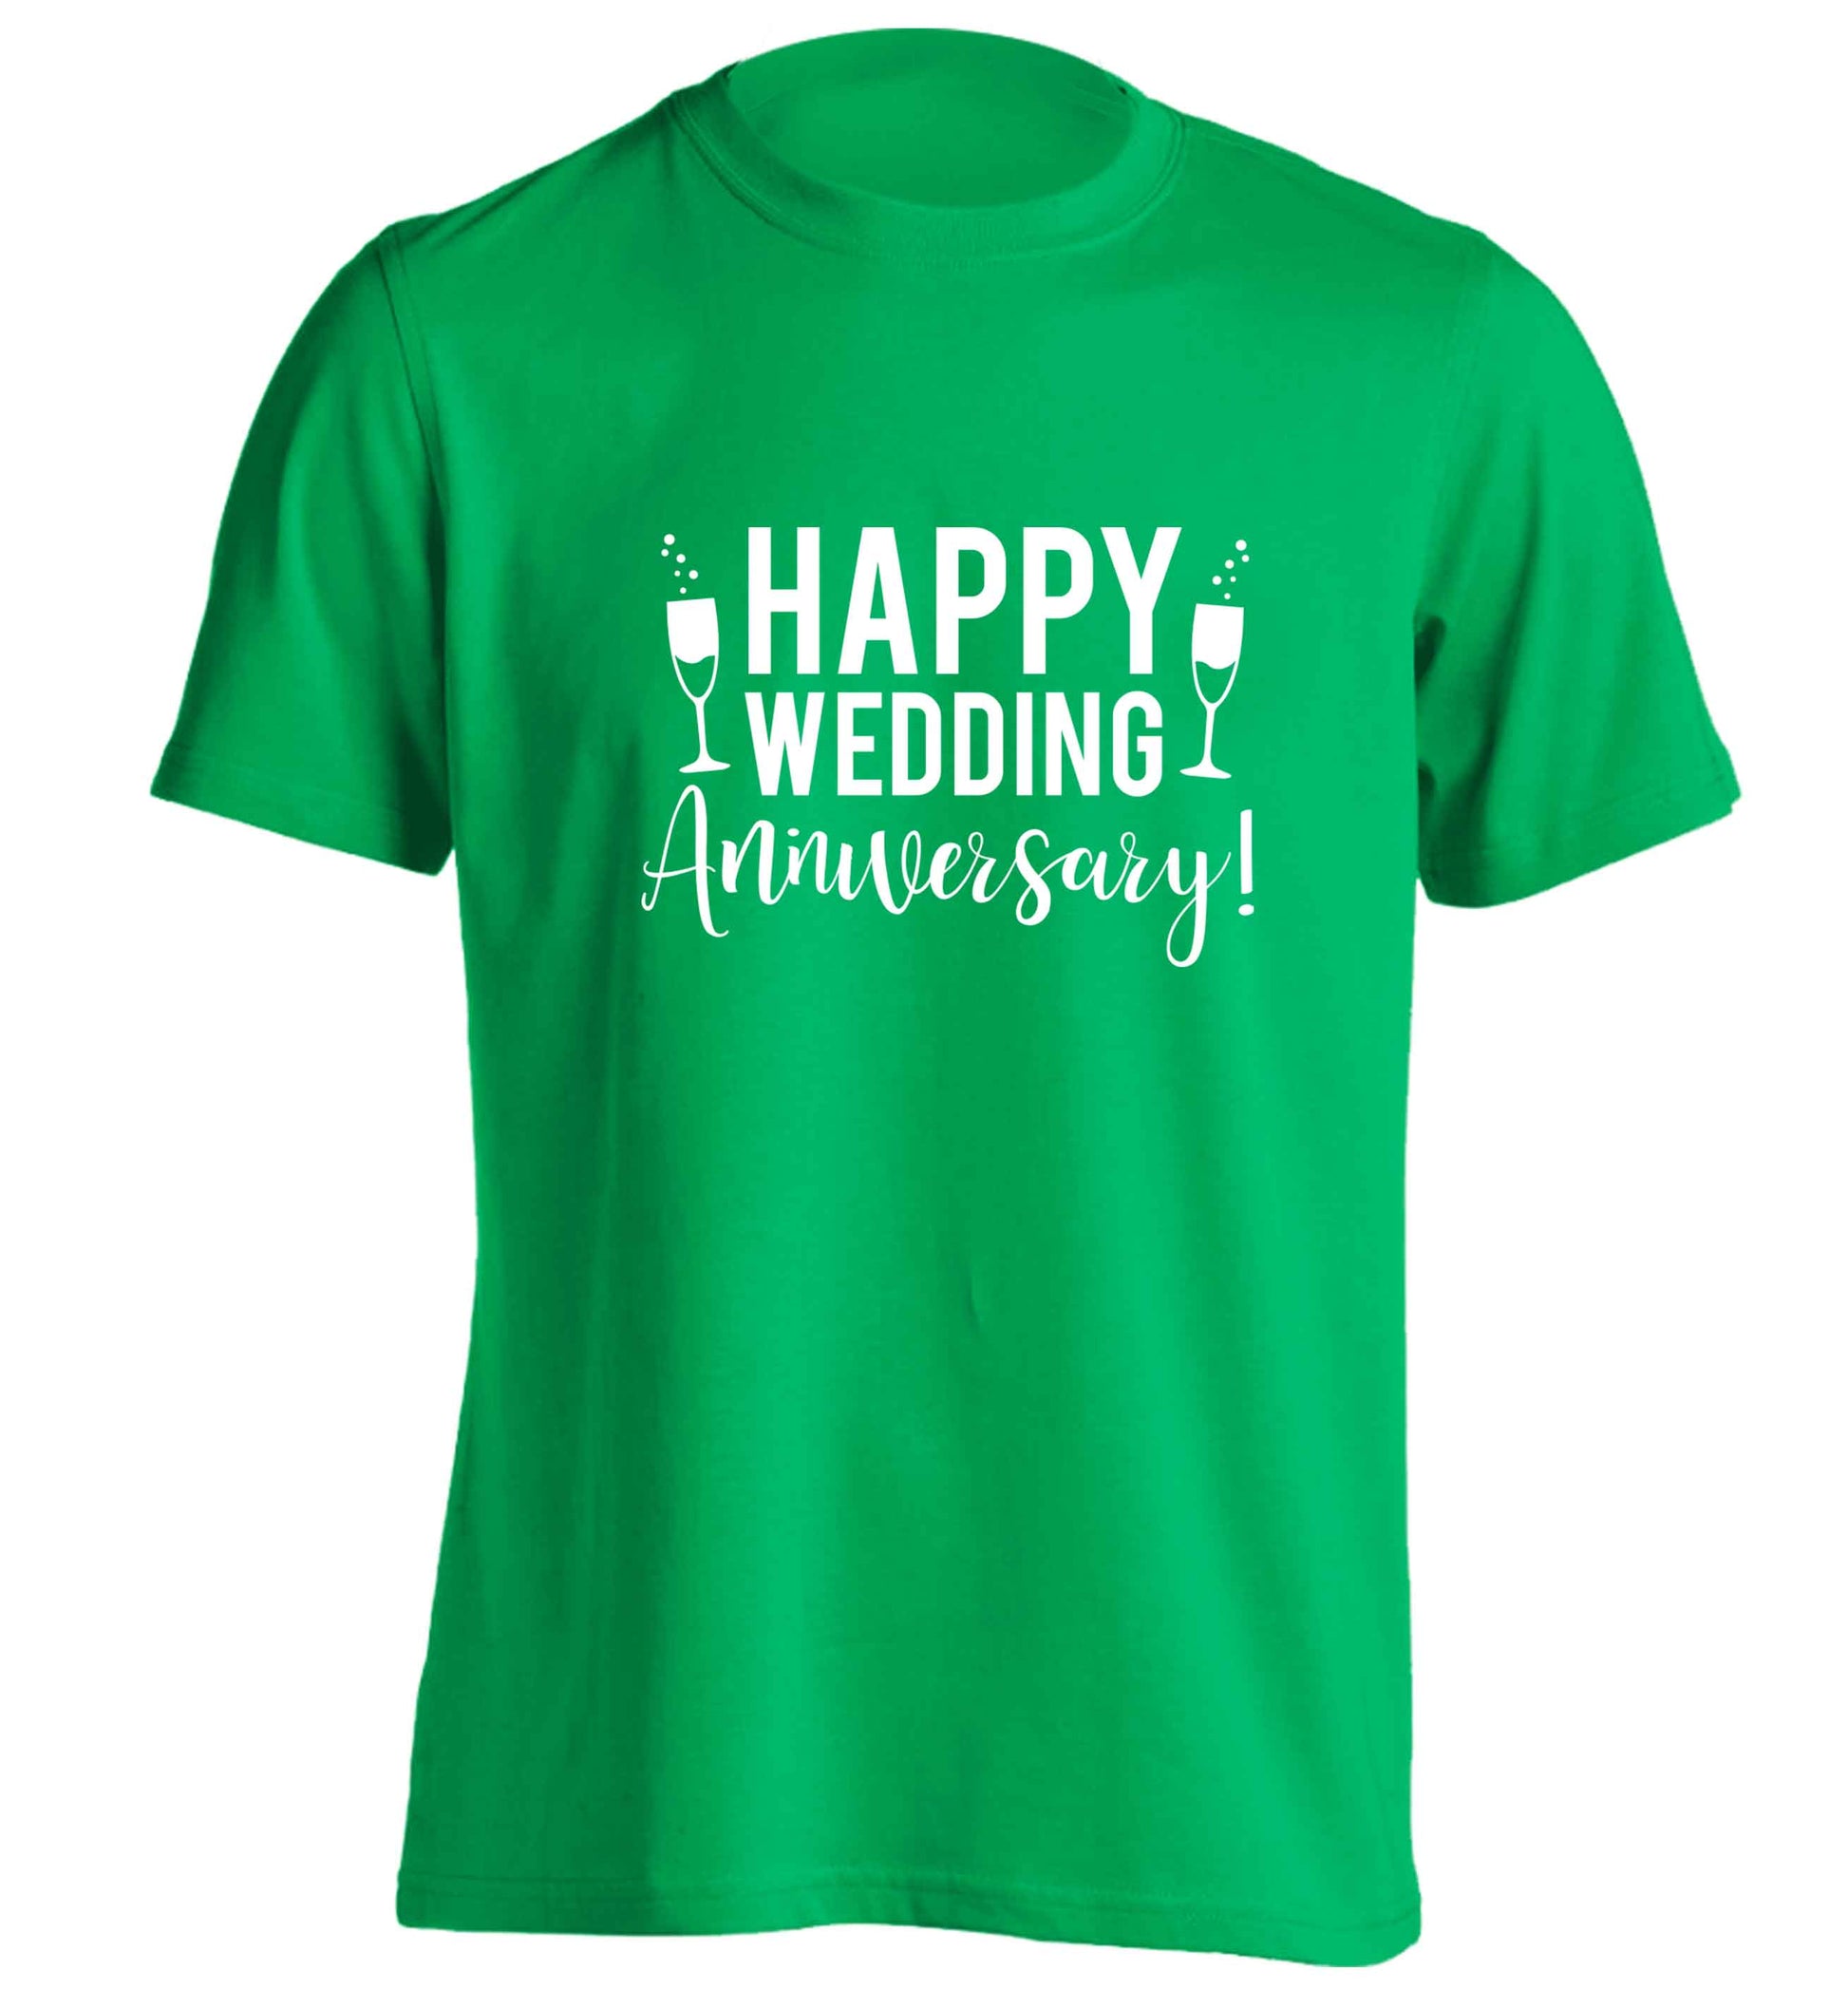 Happy wedding anniversary! adults unisex green Tshirt 2XL